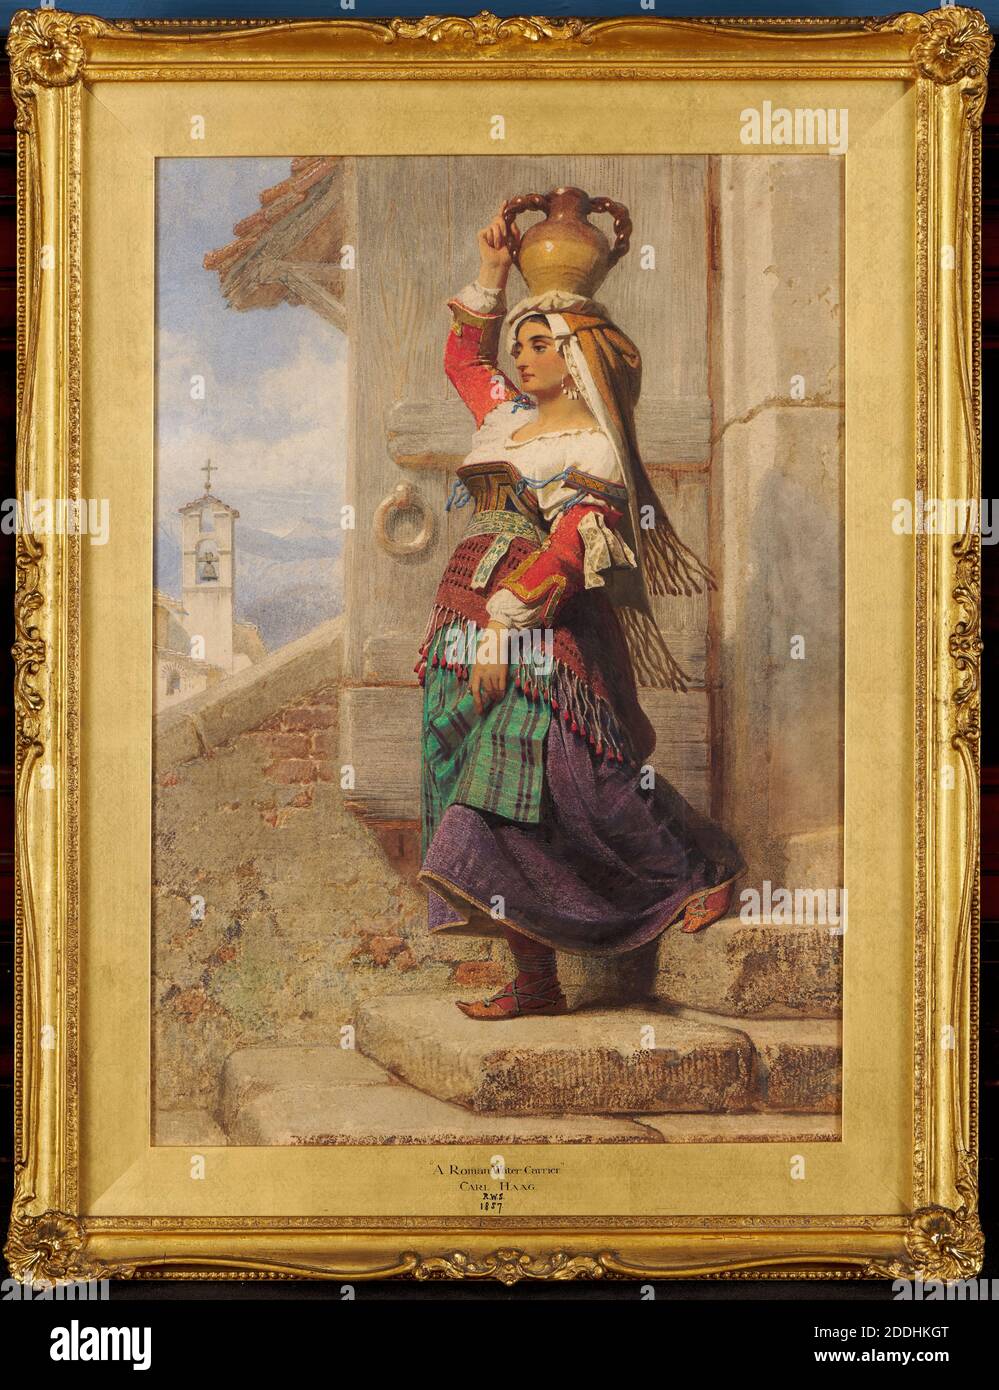 Ein römischer Wasserträger, 1857 Carl Haag, Kostüm, Aquarell, Frauen, Porträt, Weiblich, Full-length, Italien, Rom, Tradition Stockfoto